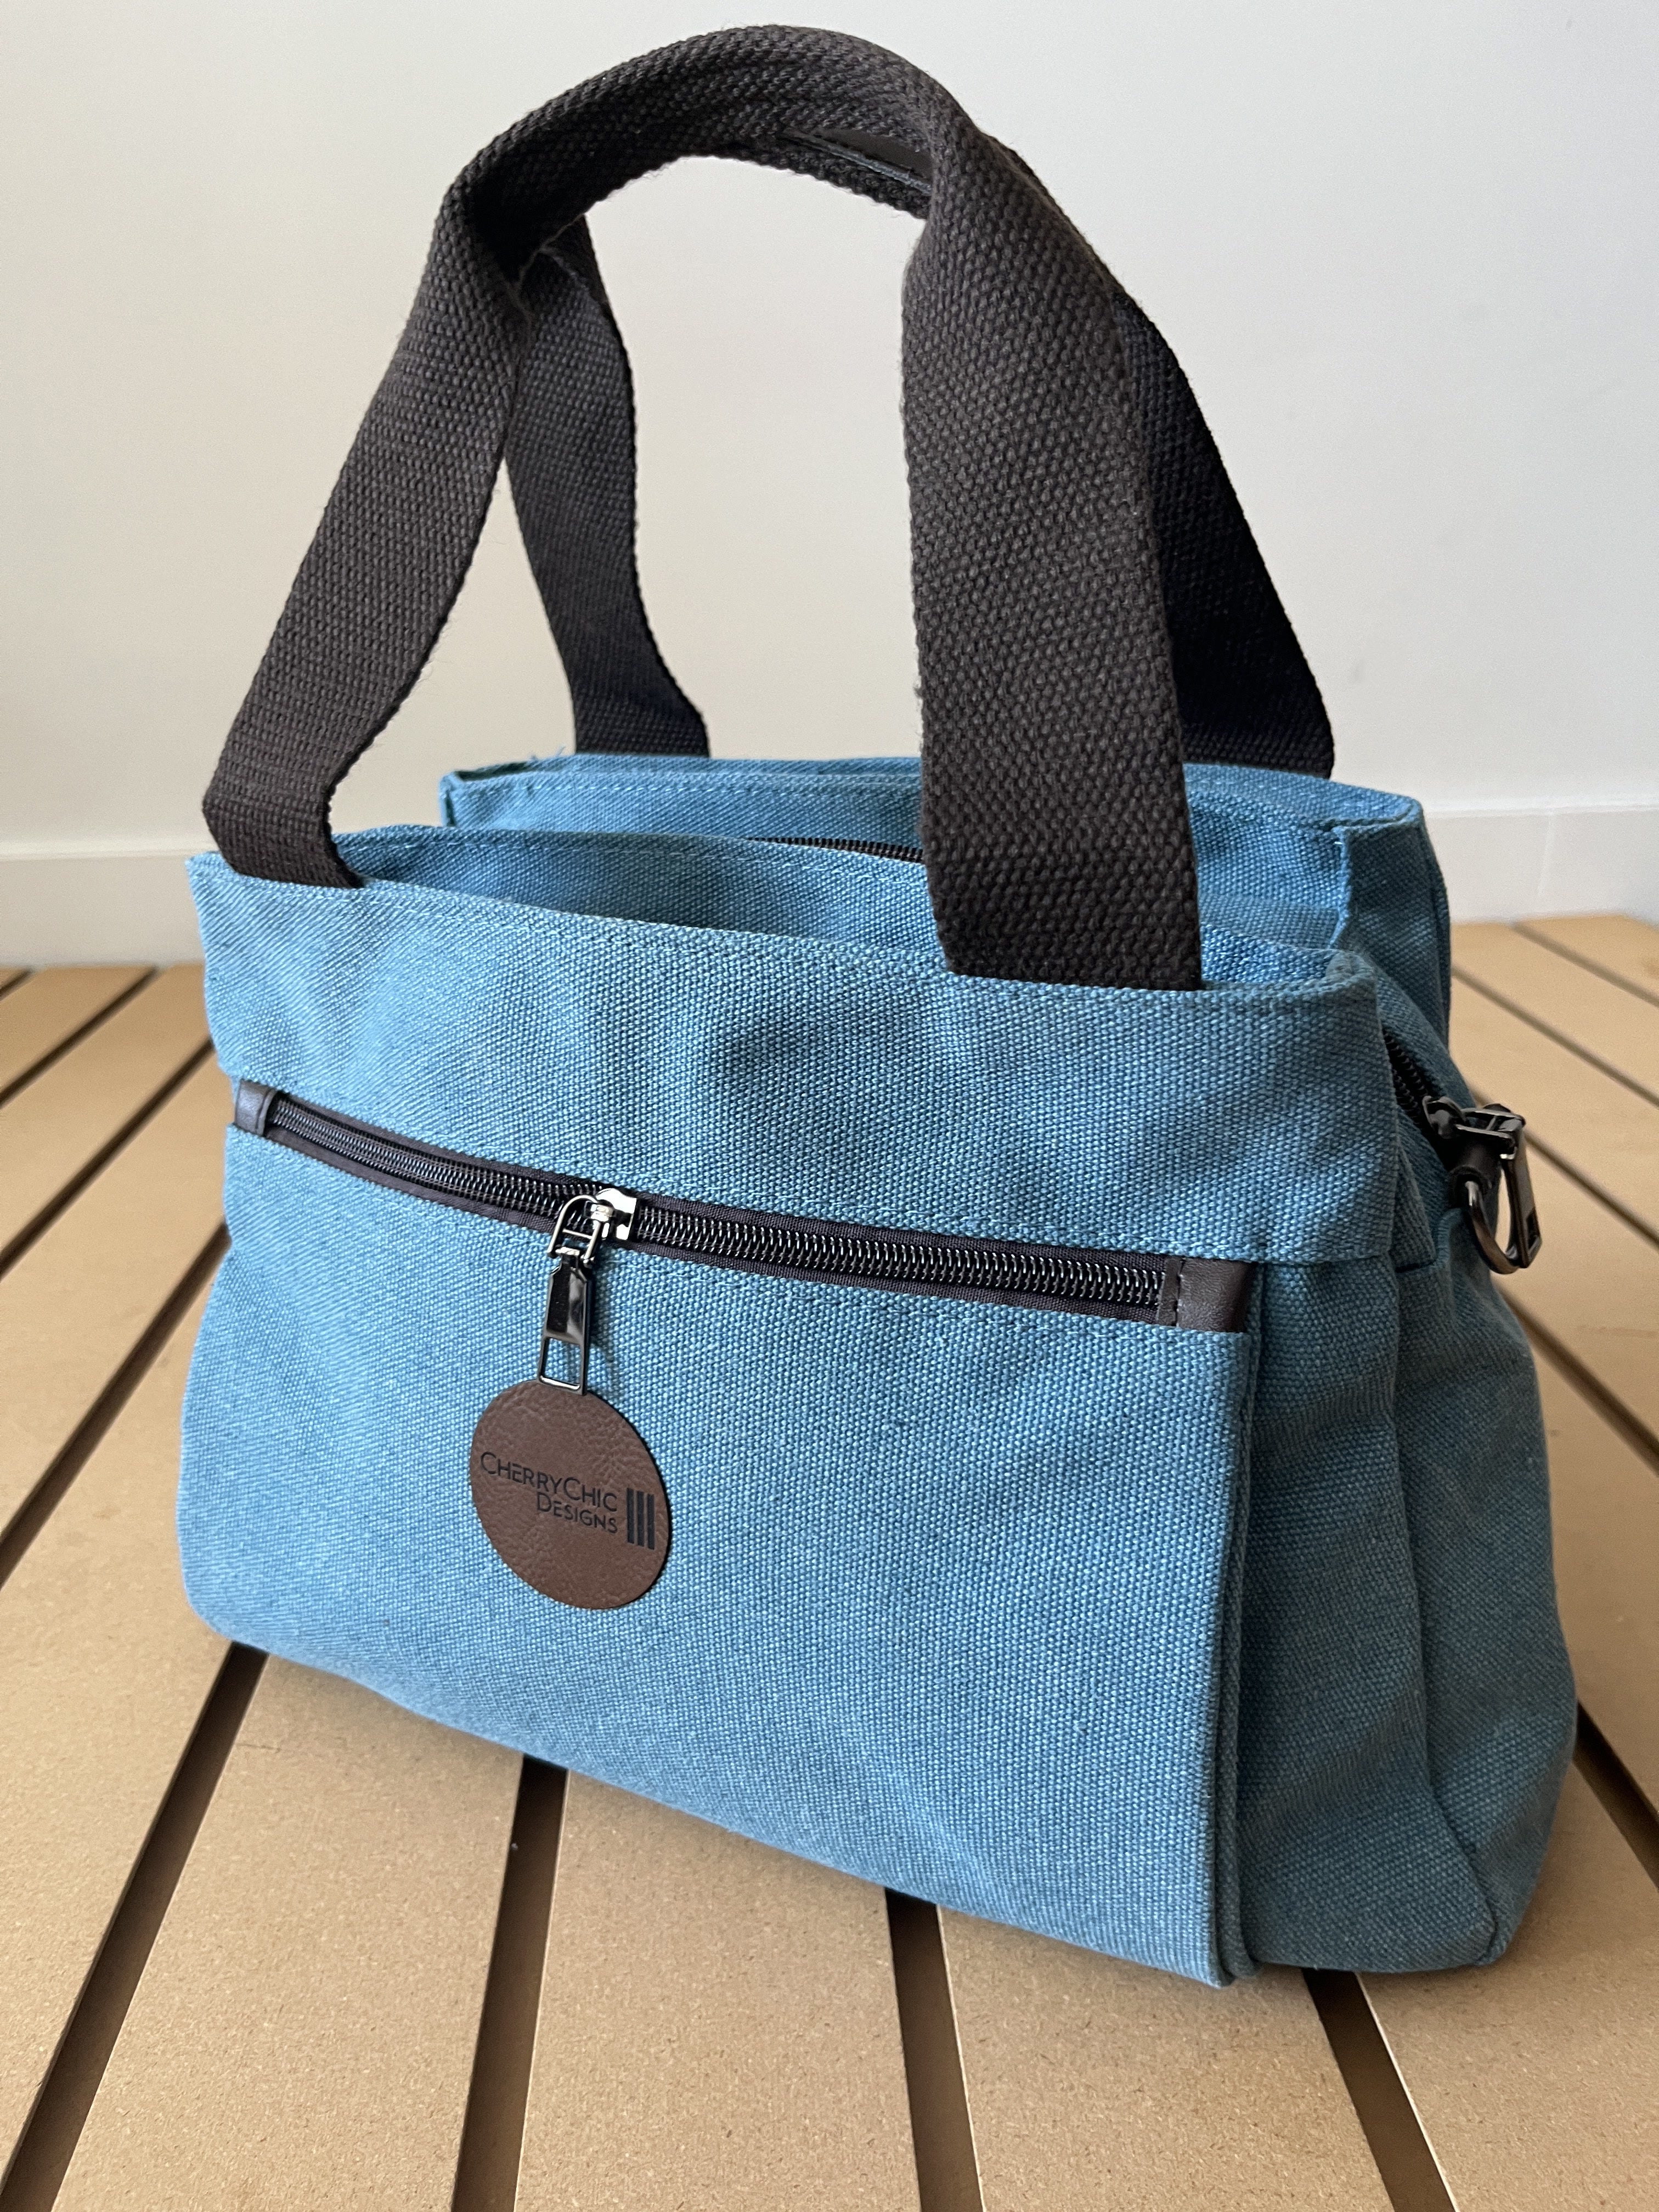 1pc Canvas Storage Bag, Minimalist Blue Shopper Bag With Wheel For